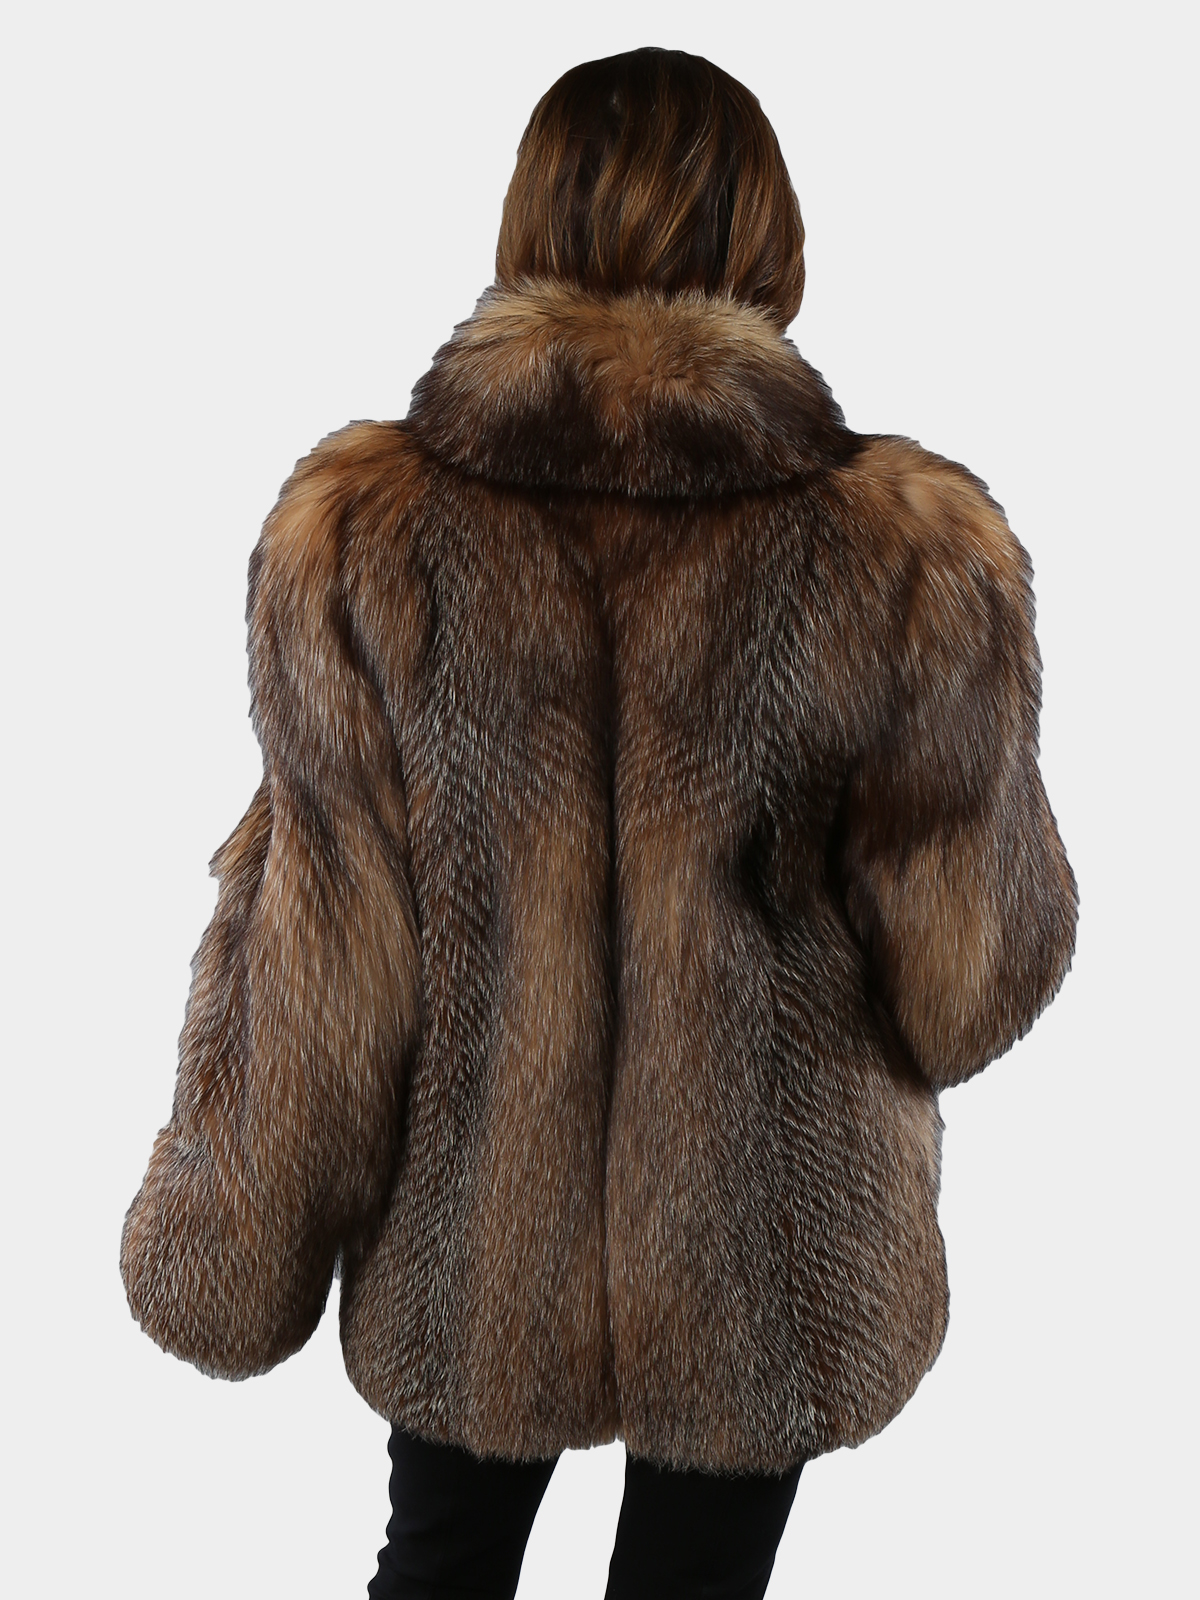 Crystal Fox Fur Jacket (Women's Small) - Estate Furs